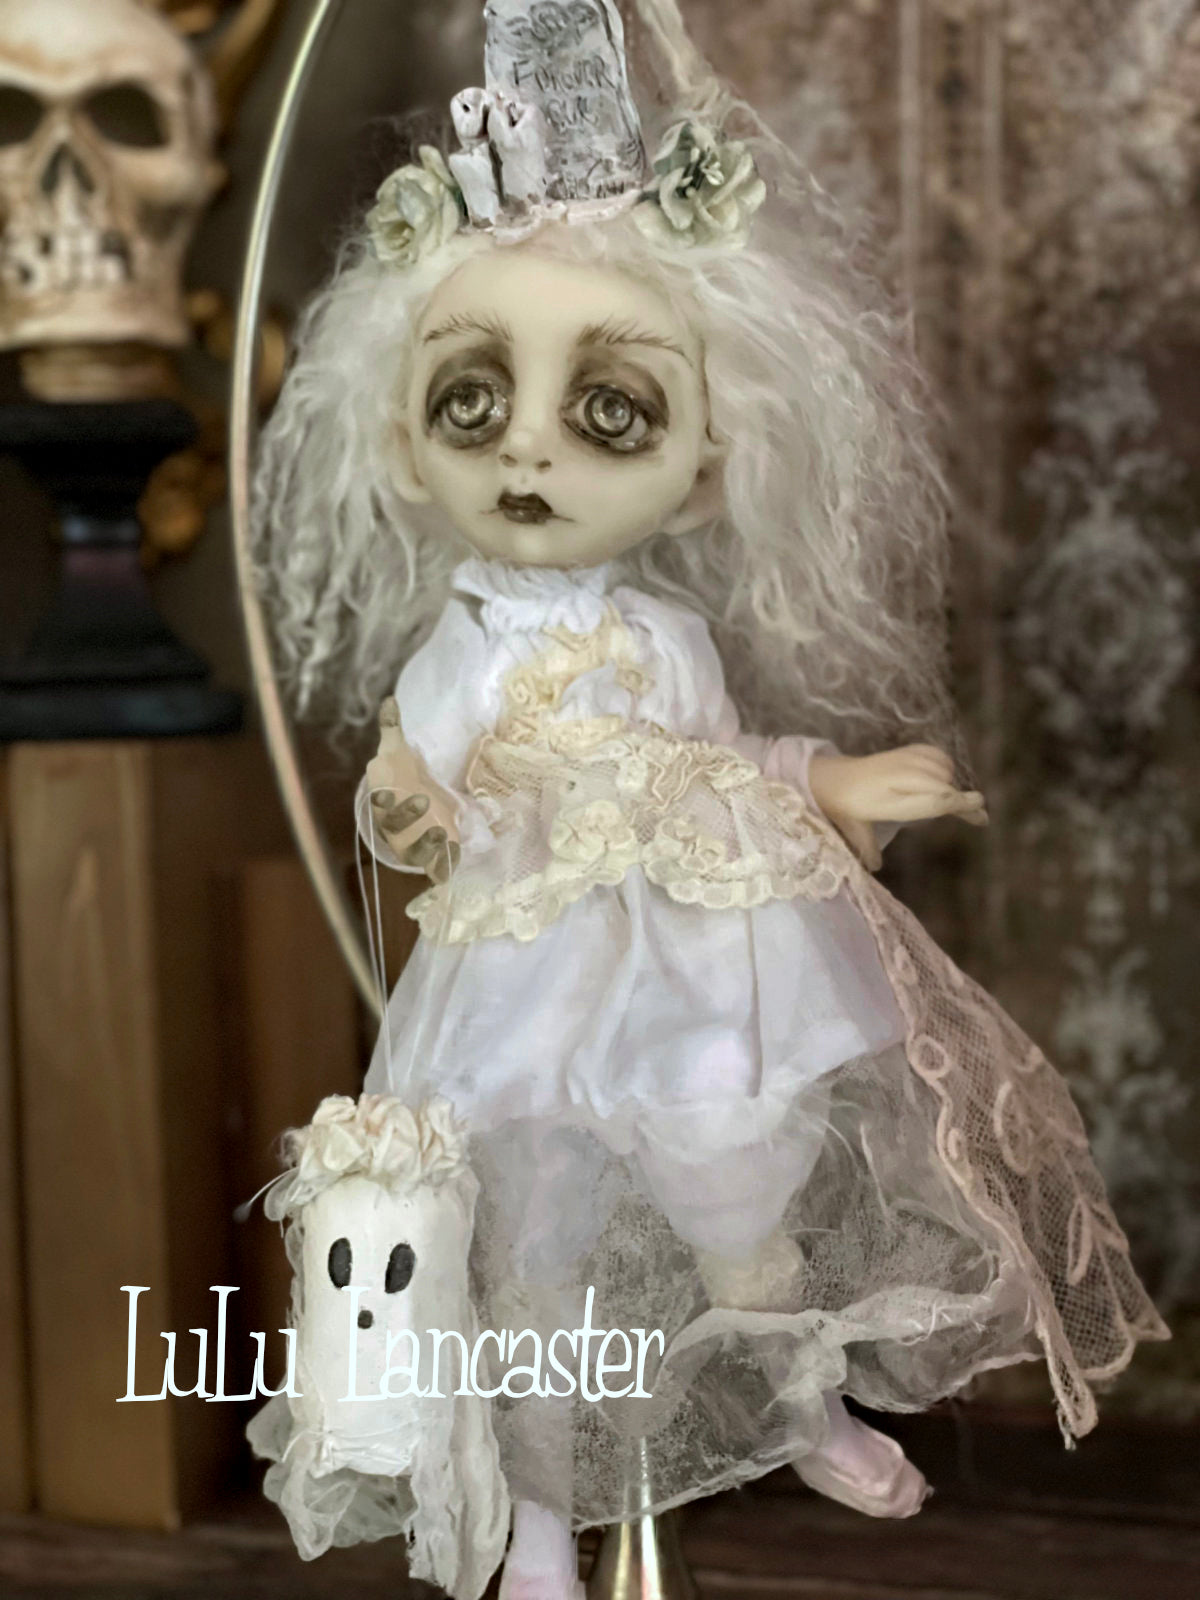 Forever Ours Graveyard Ghostie hanging Halloween Original LuLu Lancaster Art Dolls